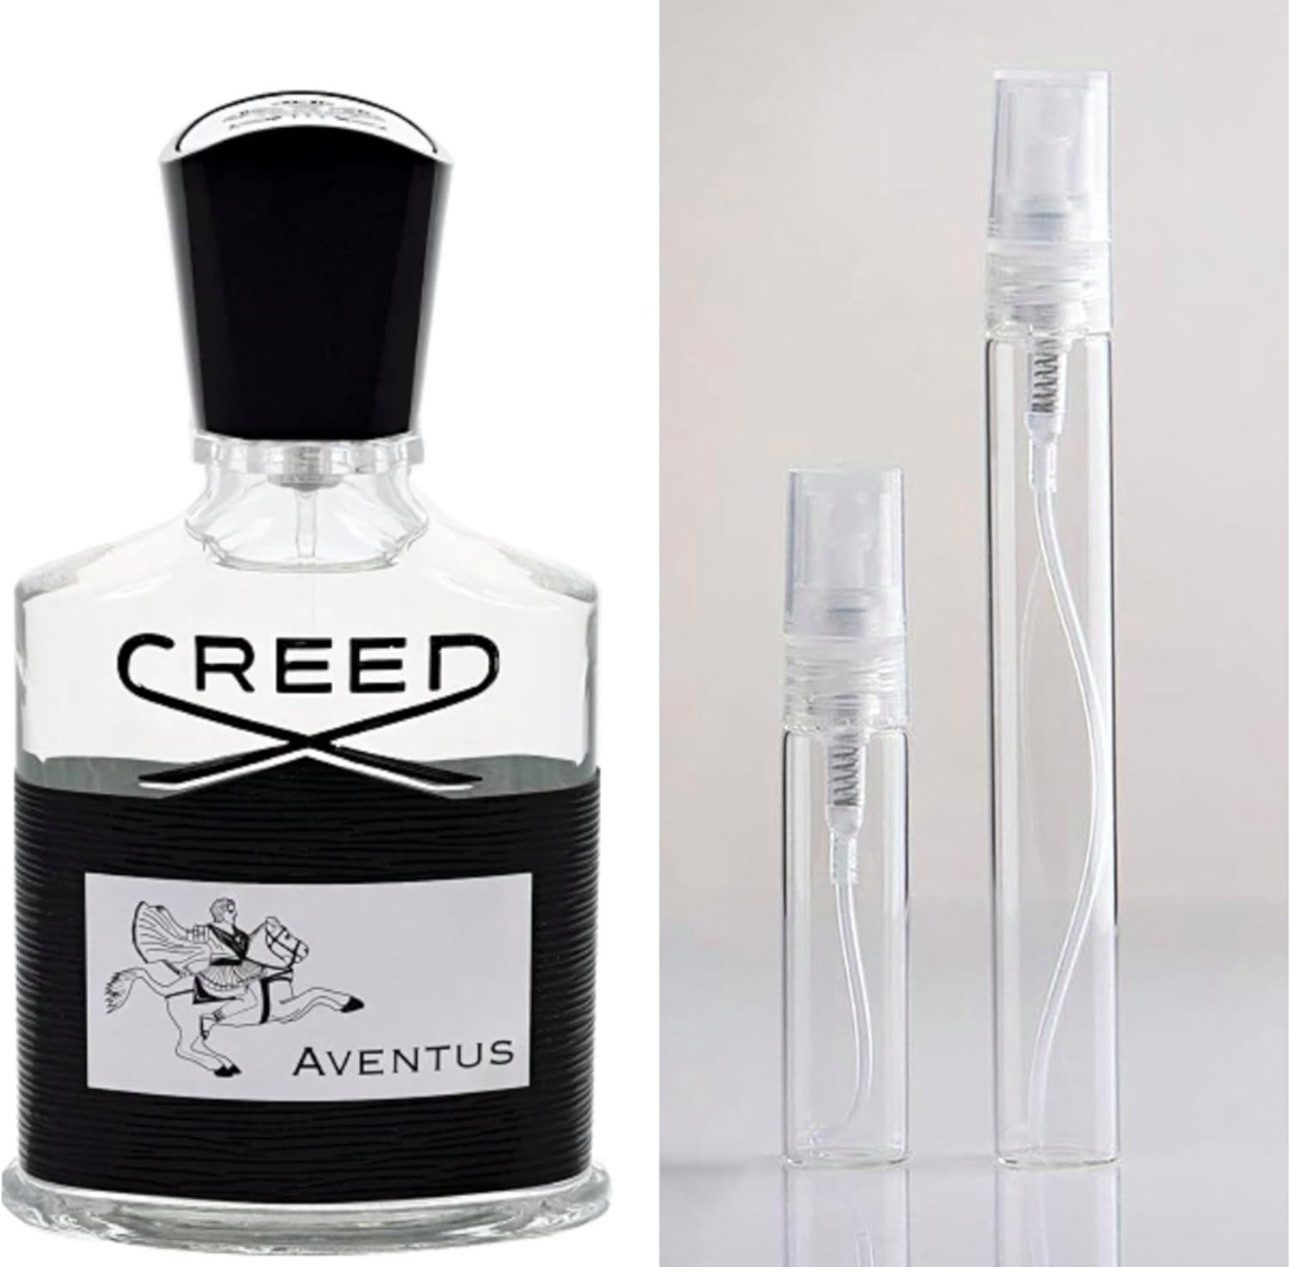 Creed Eau de Parfum Aventus homme/man - 5ml - Duftprobe